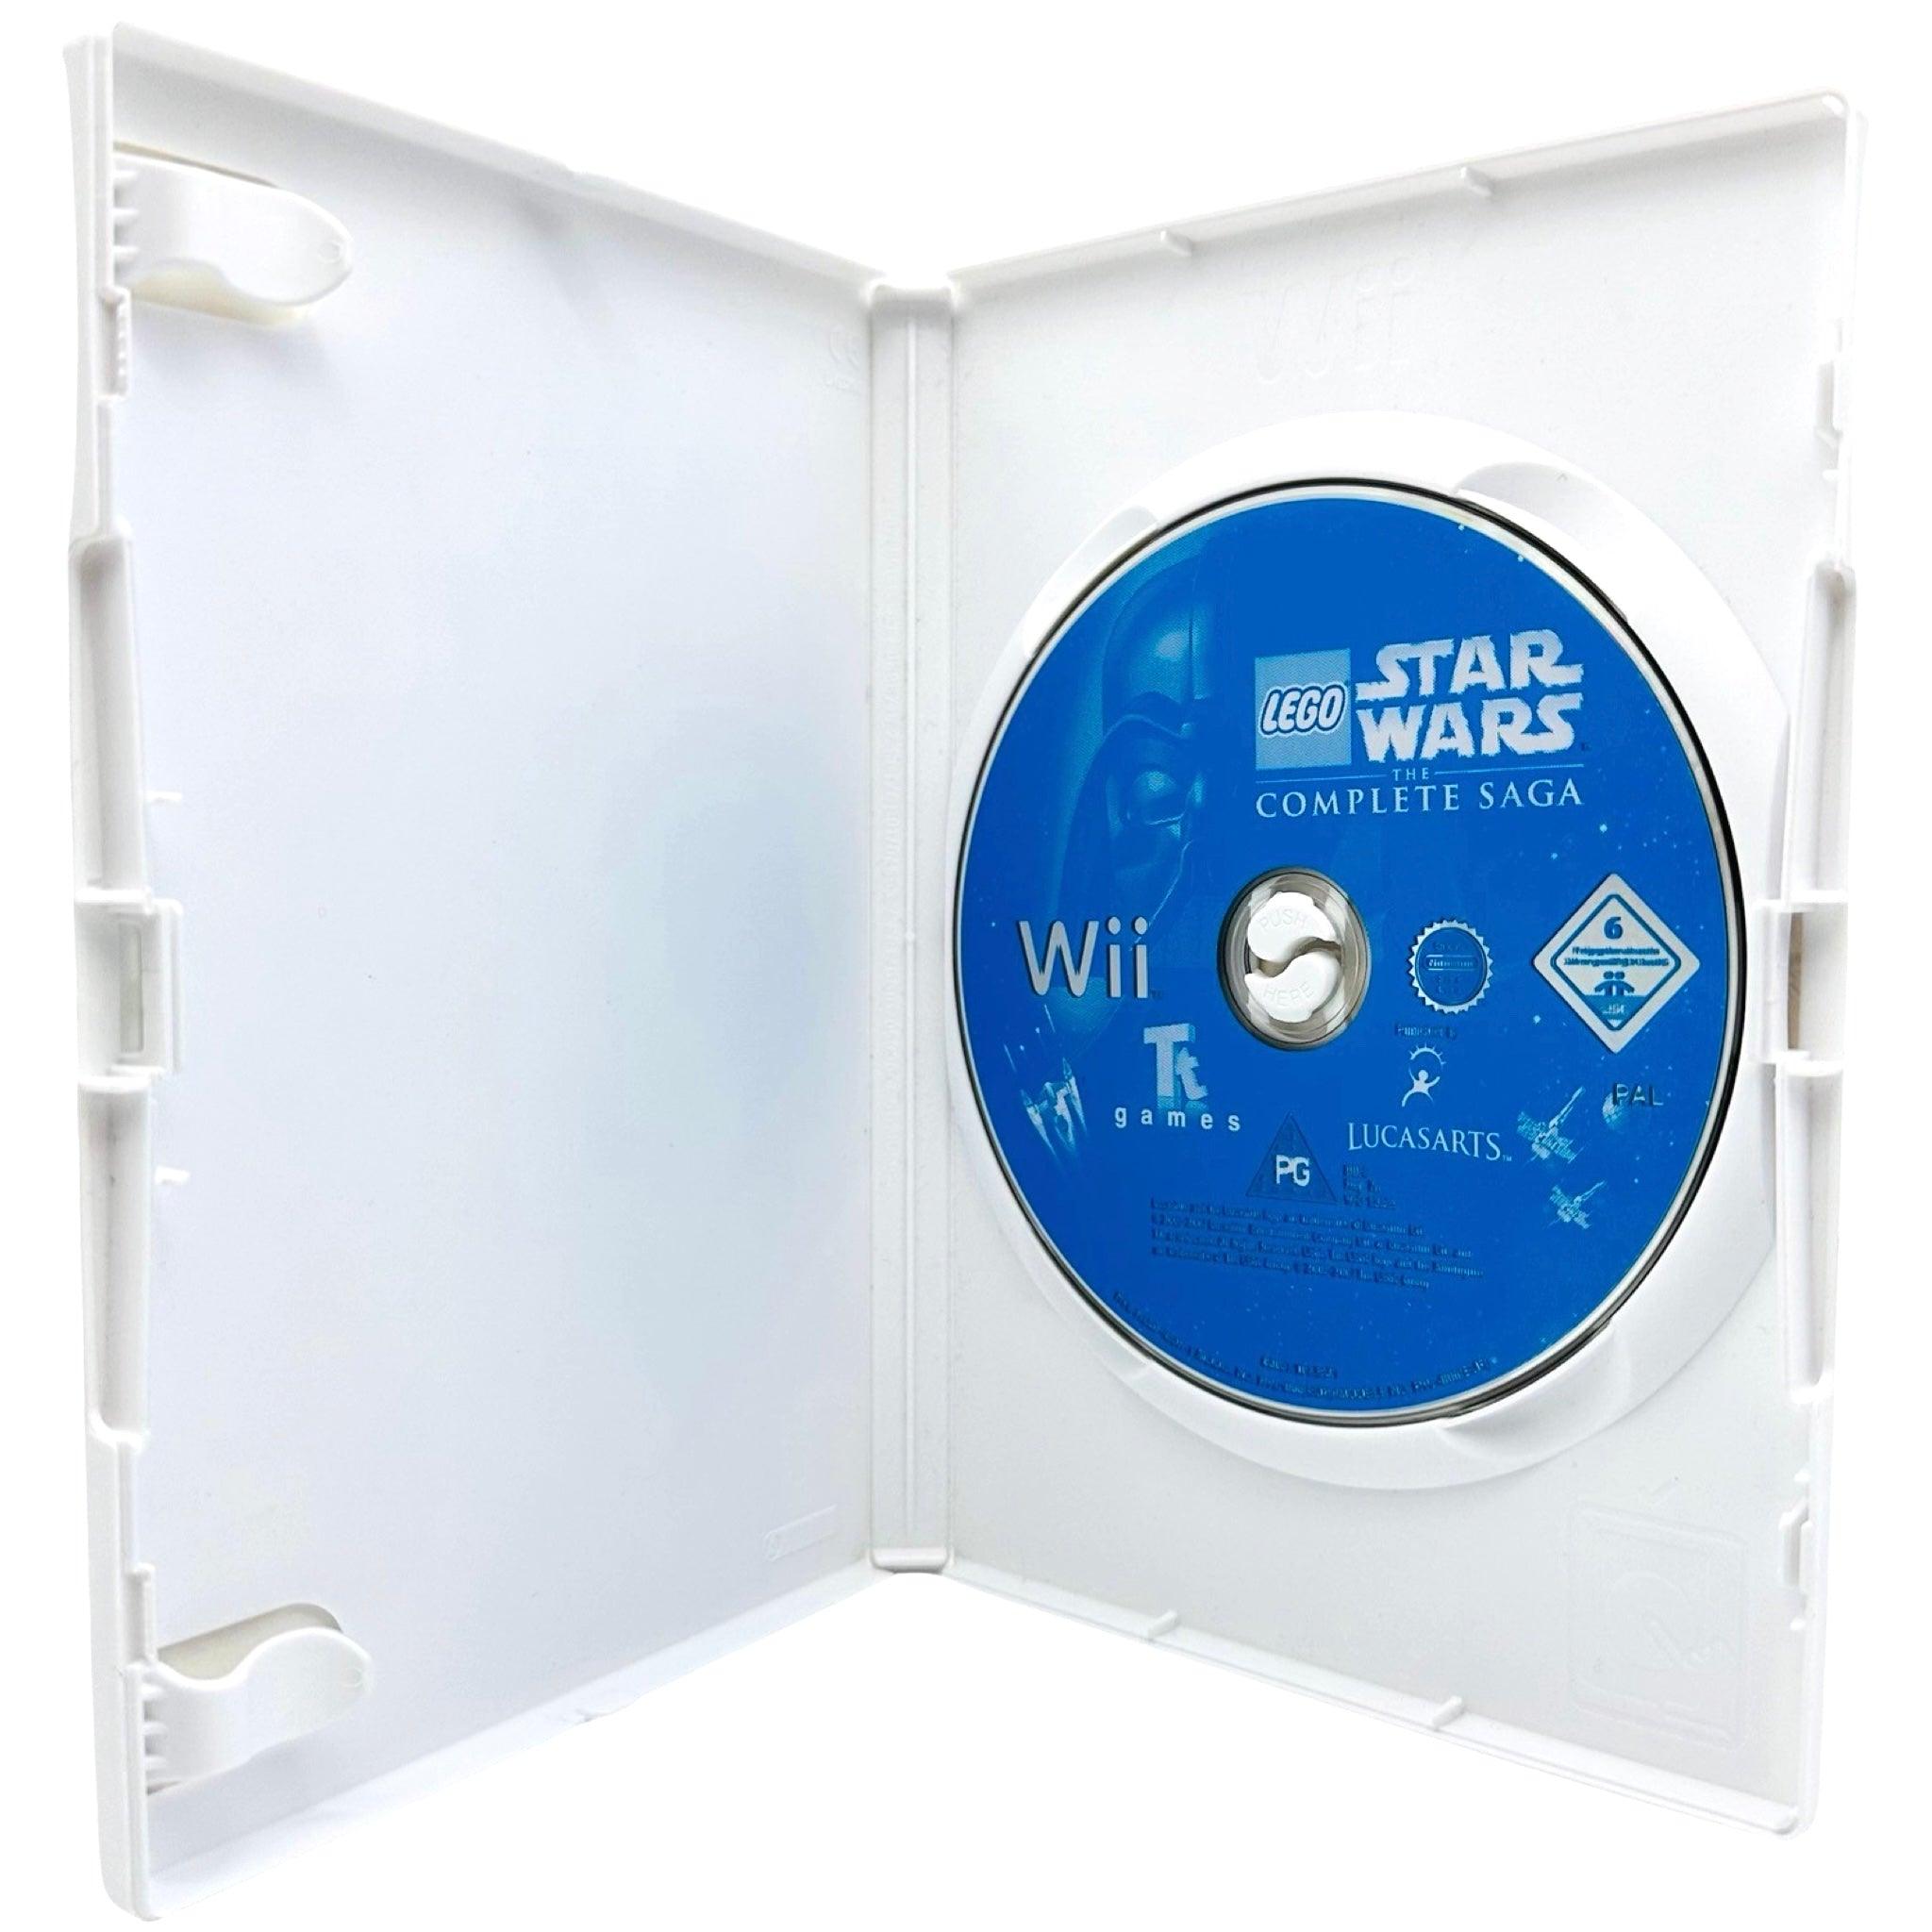 Wii: LEGO Star Wars: The Complete Saga - RetroGaming.no